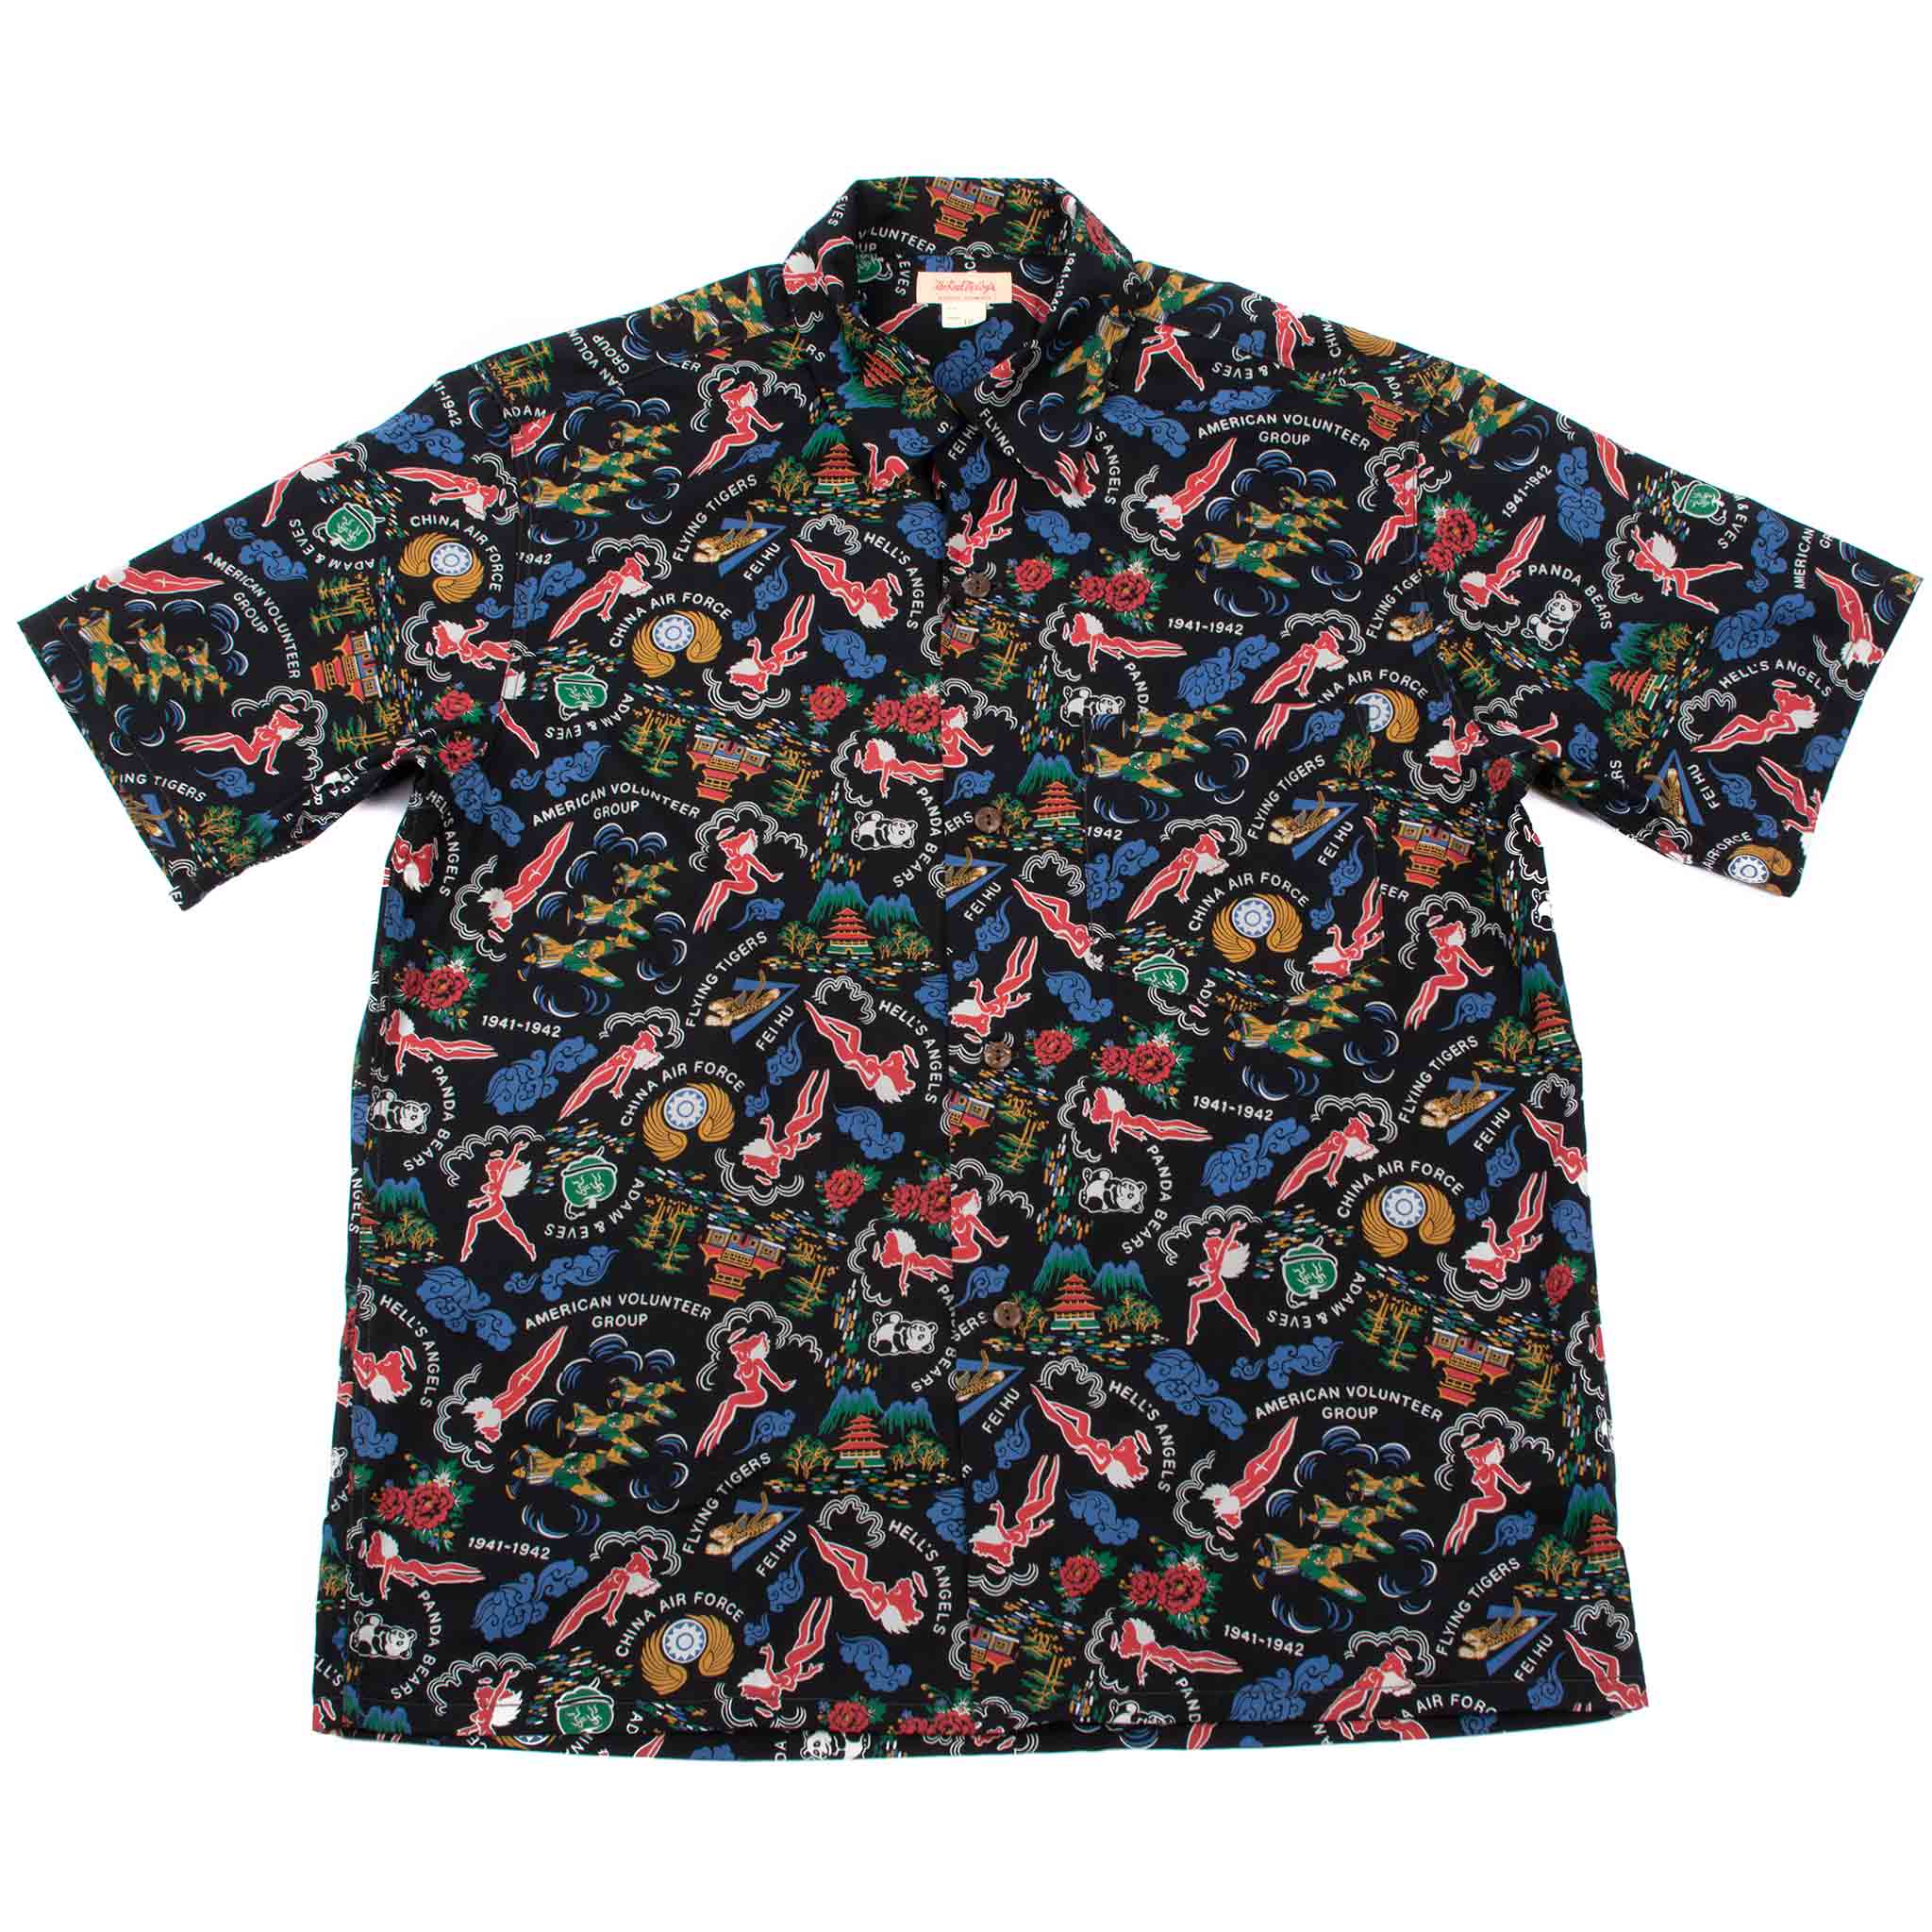 The Real McCoy's MS21002 Cotton Hawaiian Shirt / Flying Tigers Black